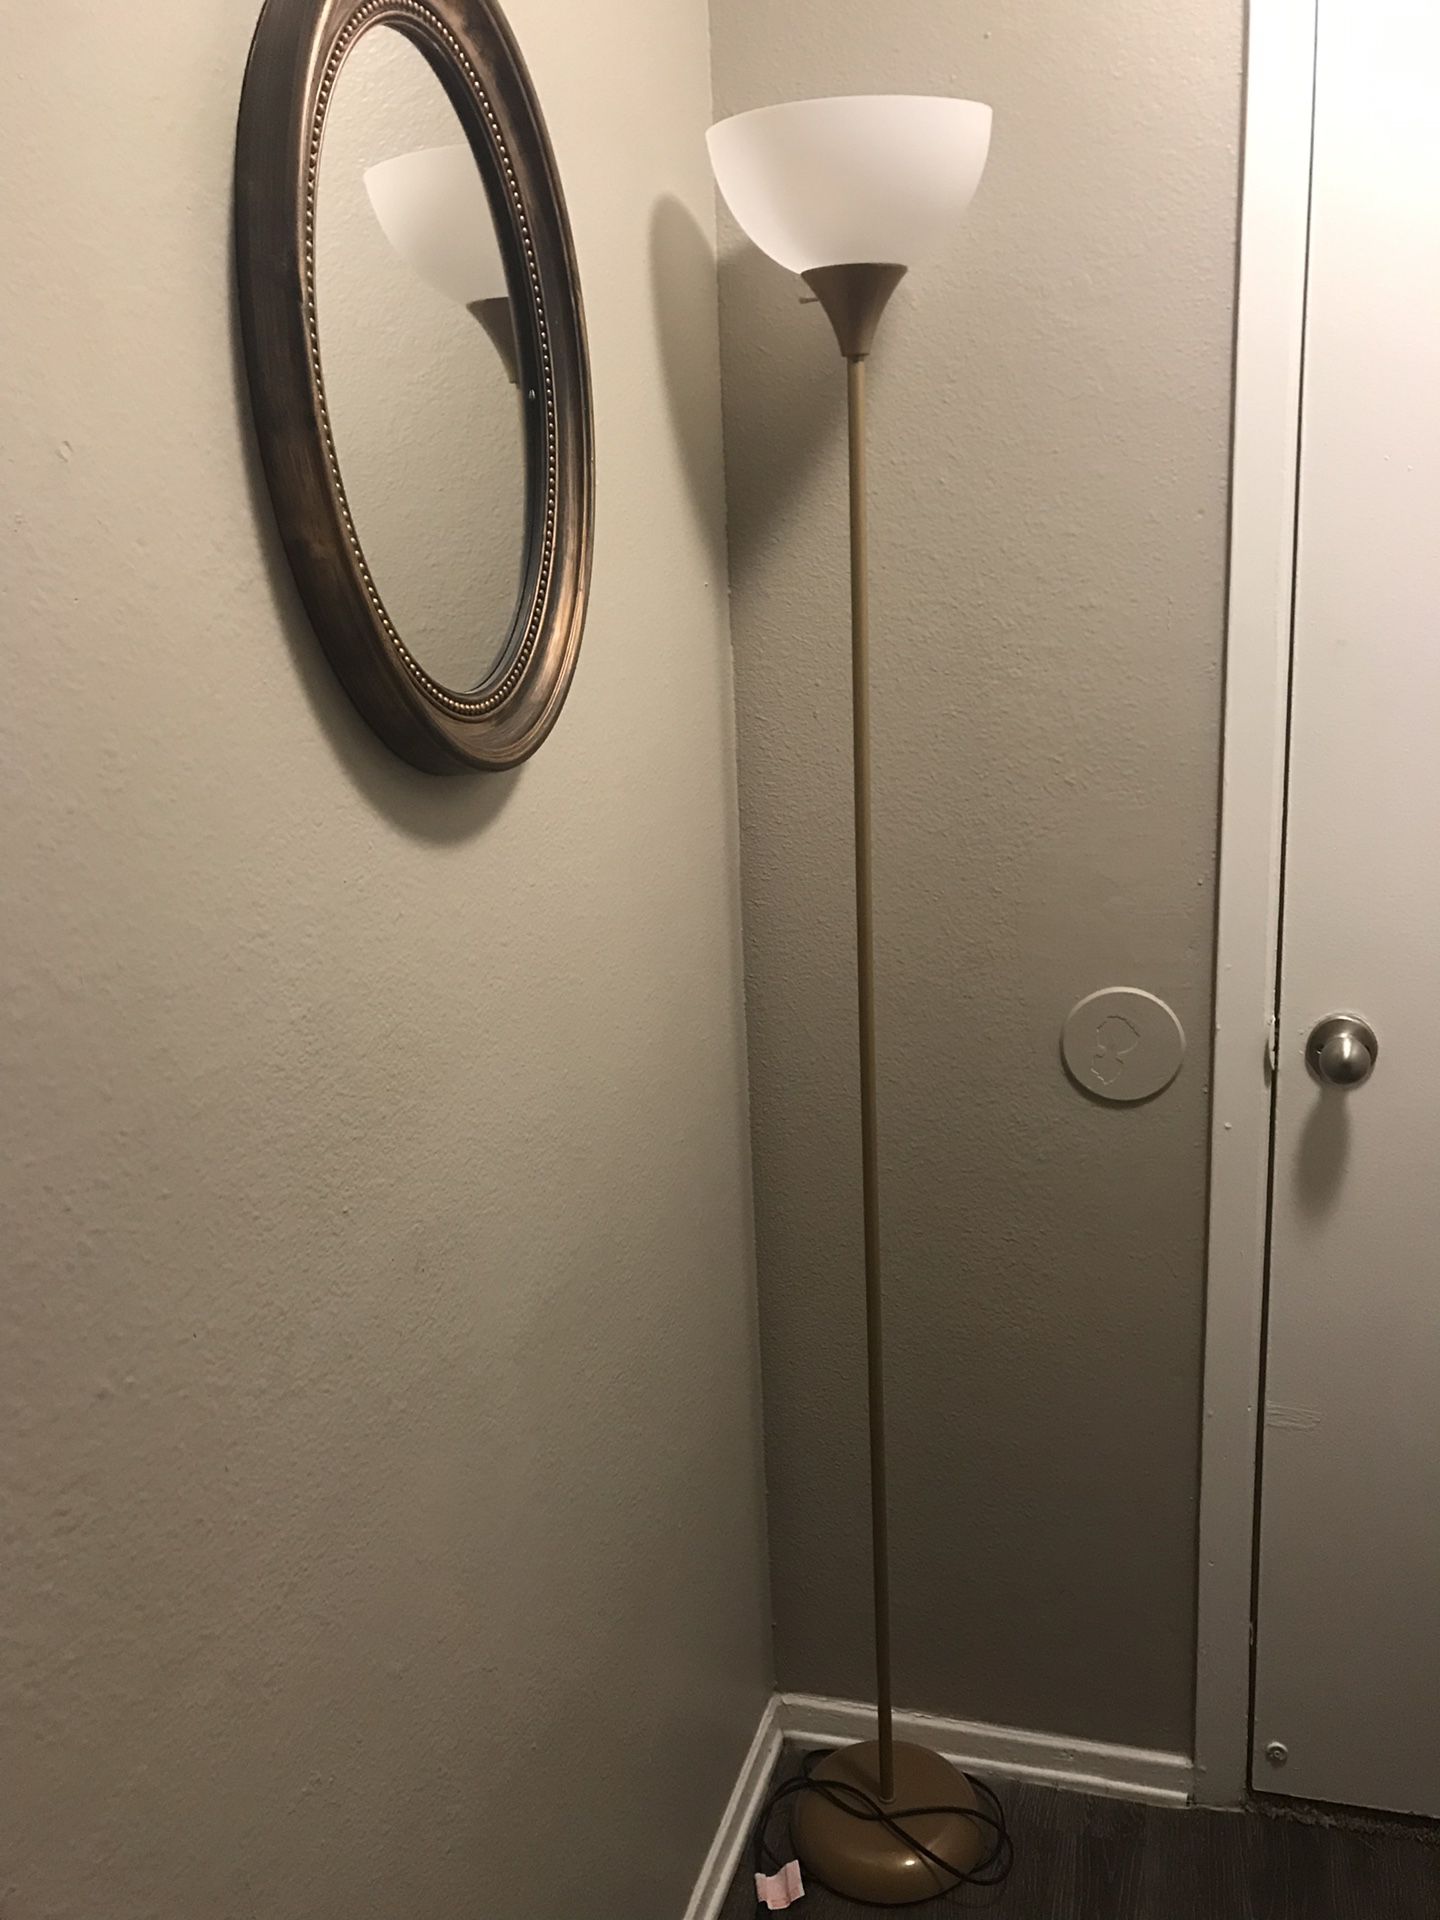 Tall lamp + mirror